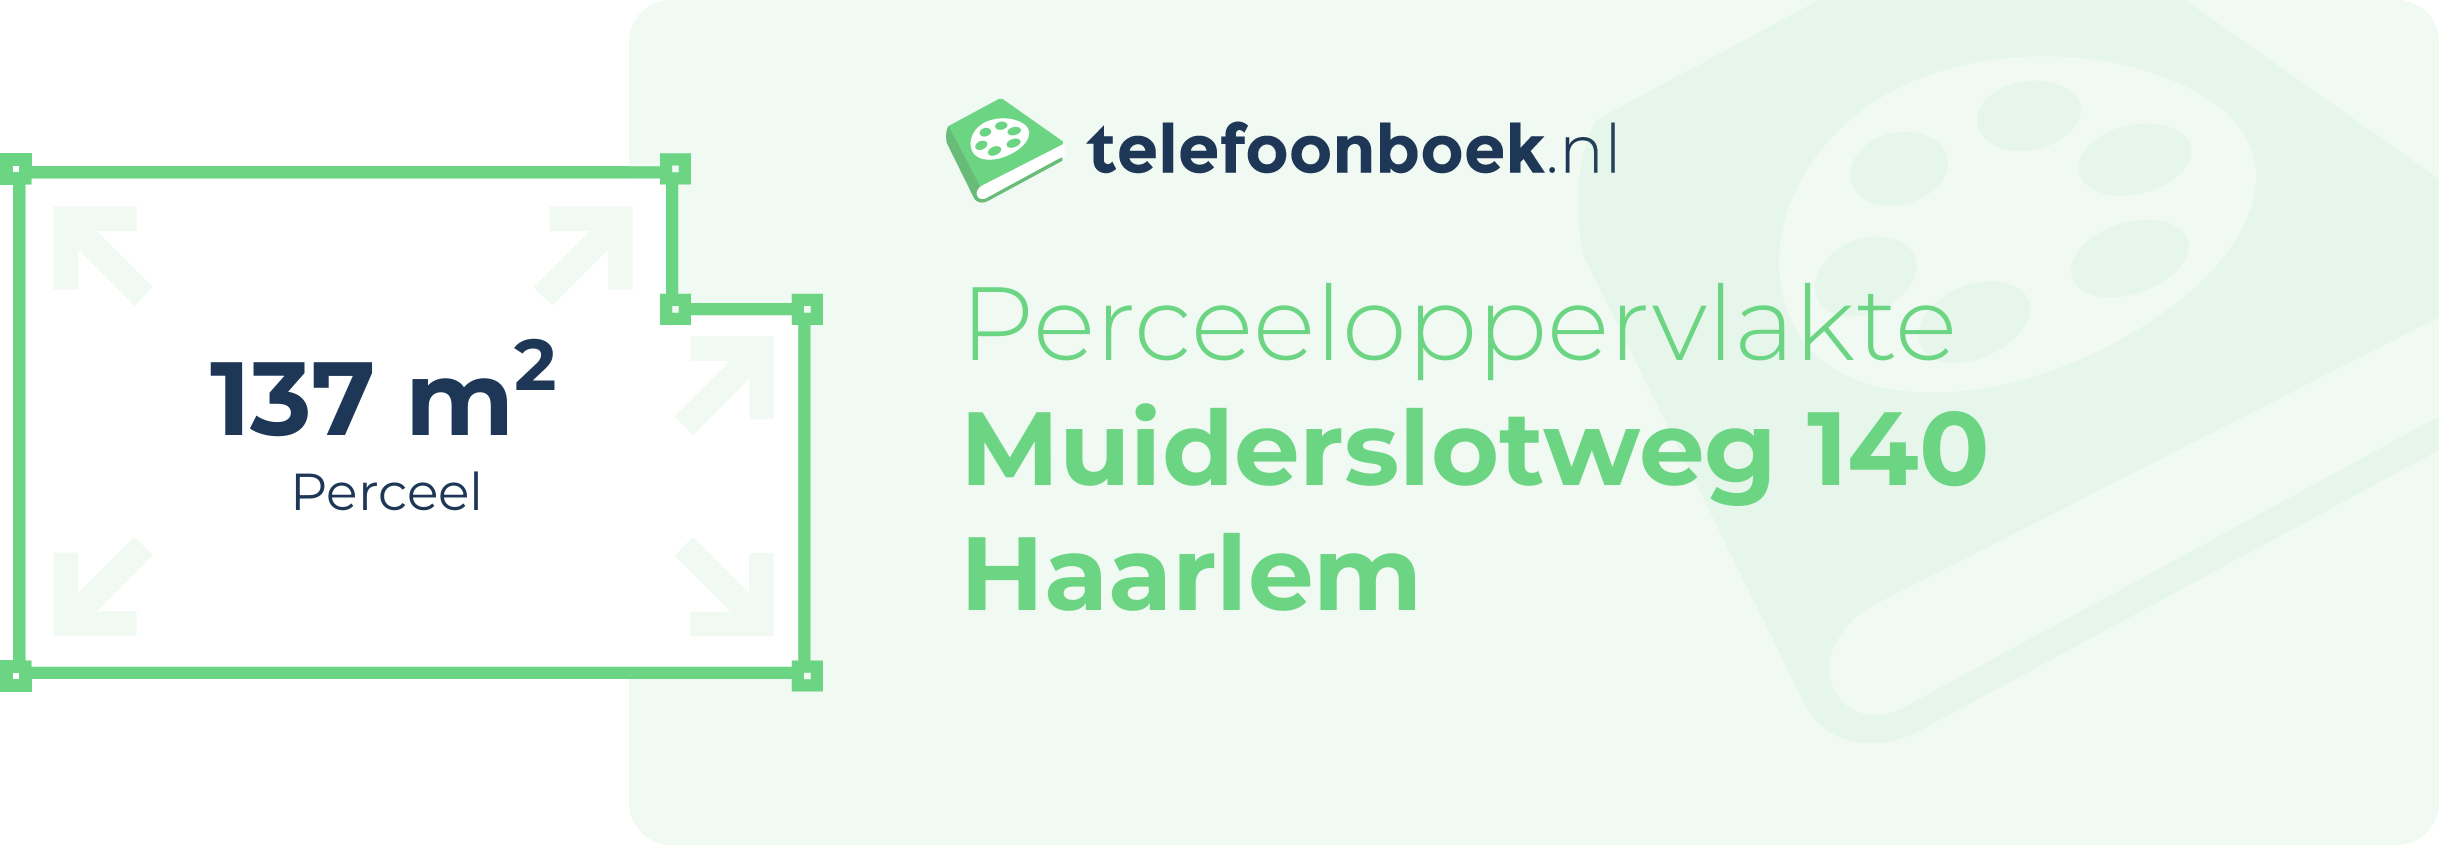 Perceeloppervlakte Muiderslotweg 140 Haarlem